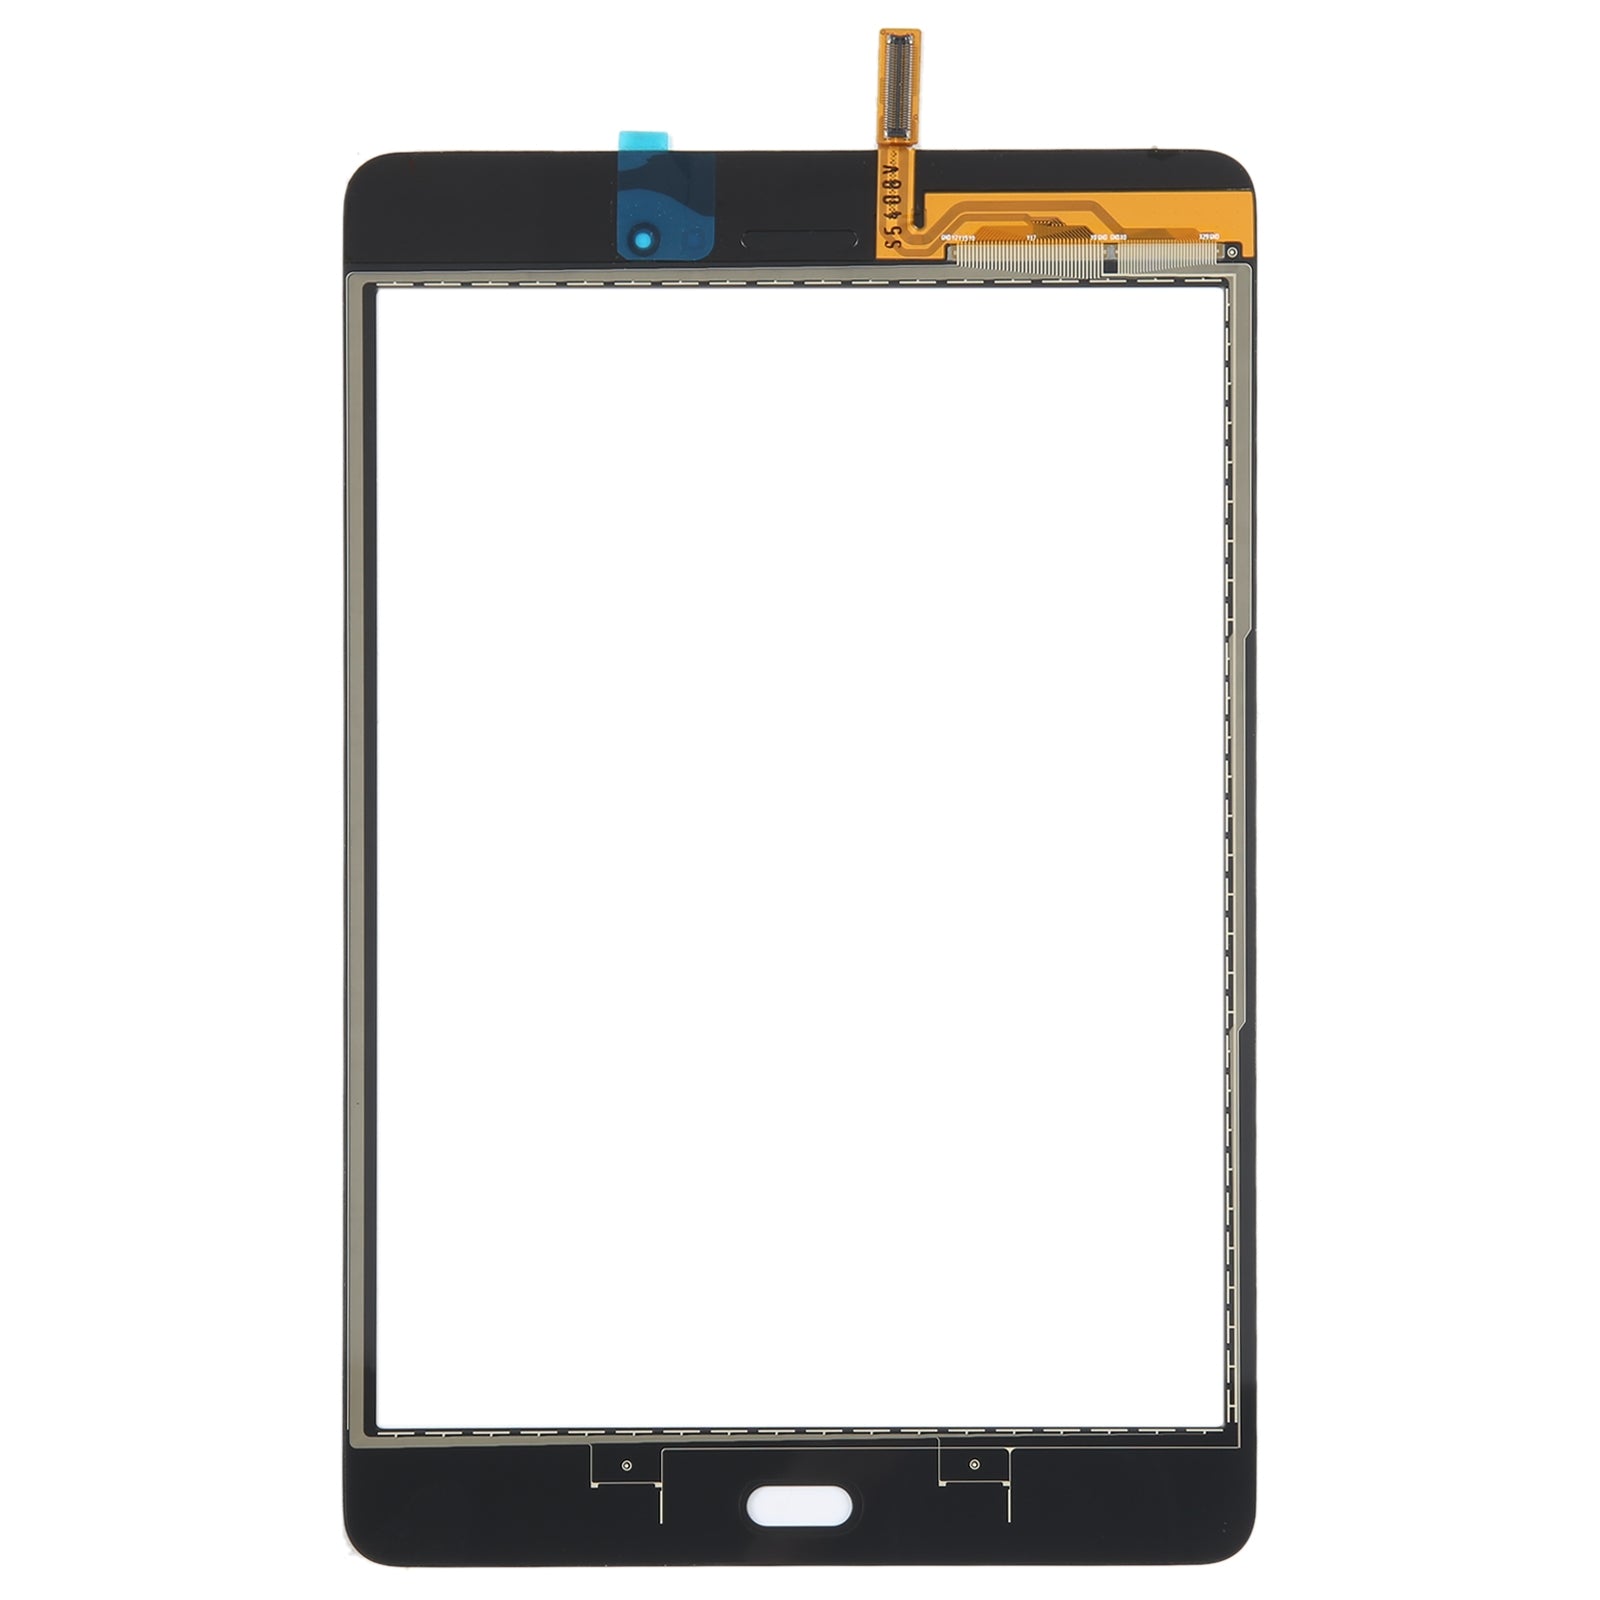 Pantalla Tactil Digitalizador Samsung Galaxy Tab A 8.0 / T350 versión WIFI Azul